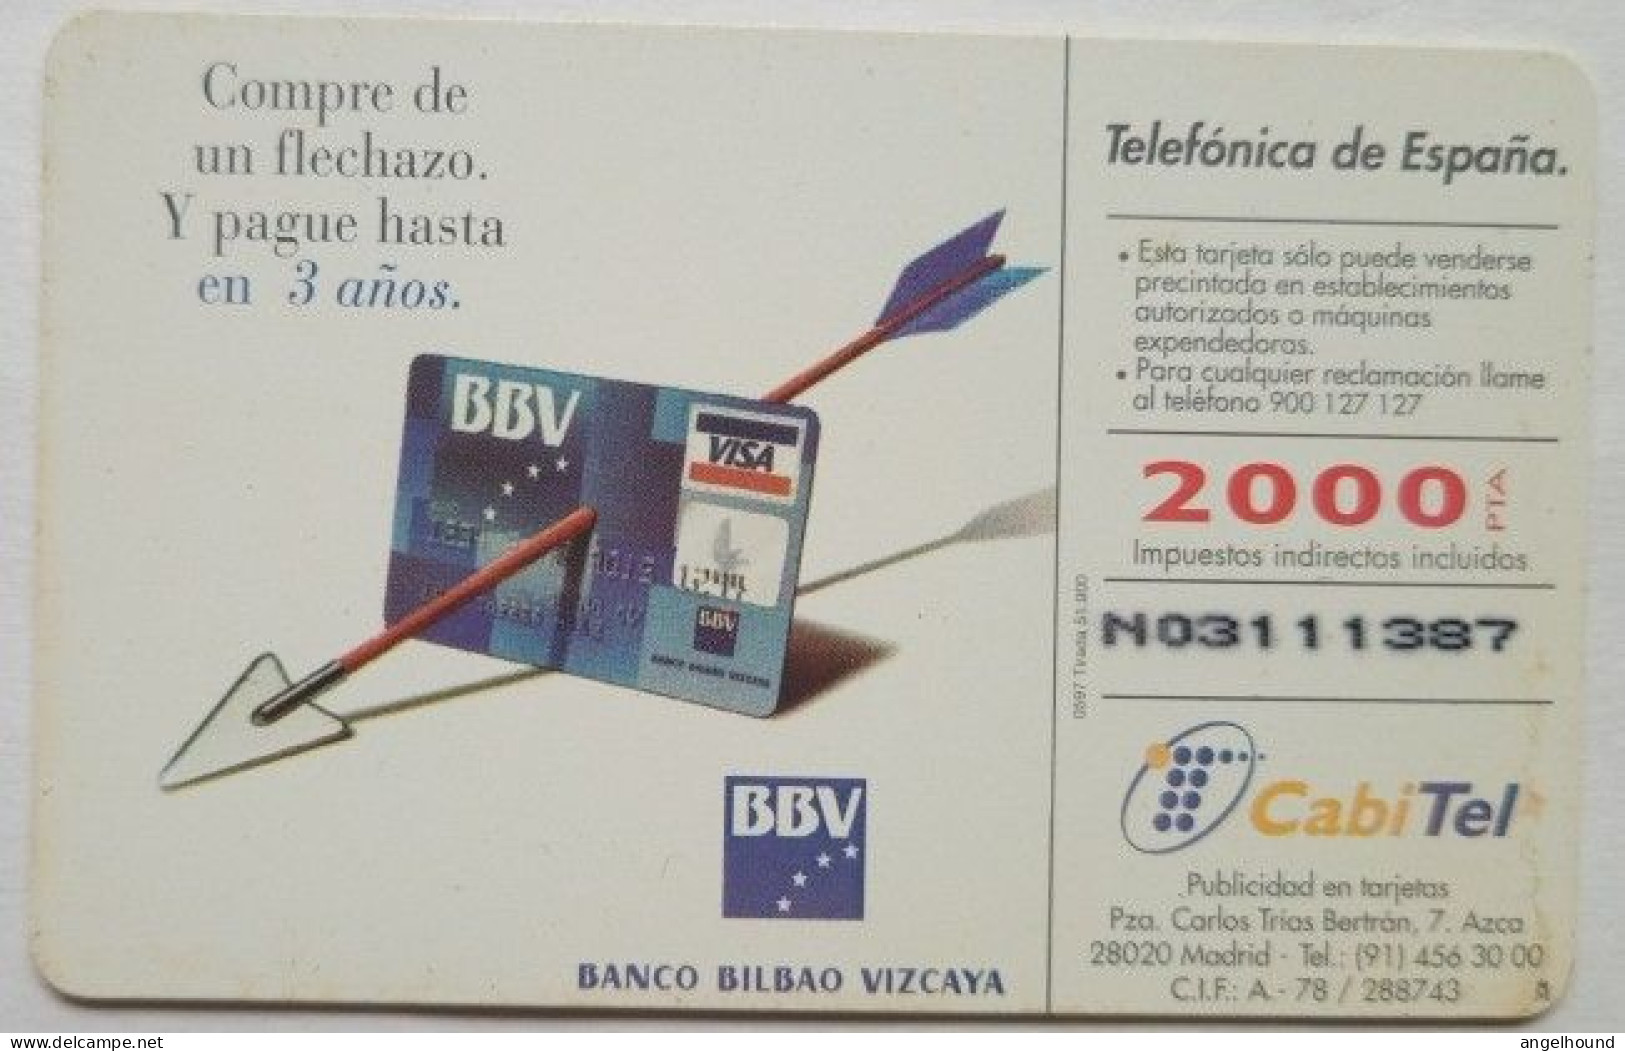 Spain 2000 Pta. Chip Card - Moneda Andalusi En La Alhambra - Basisuitgaven